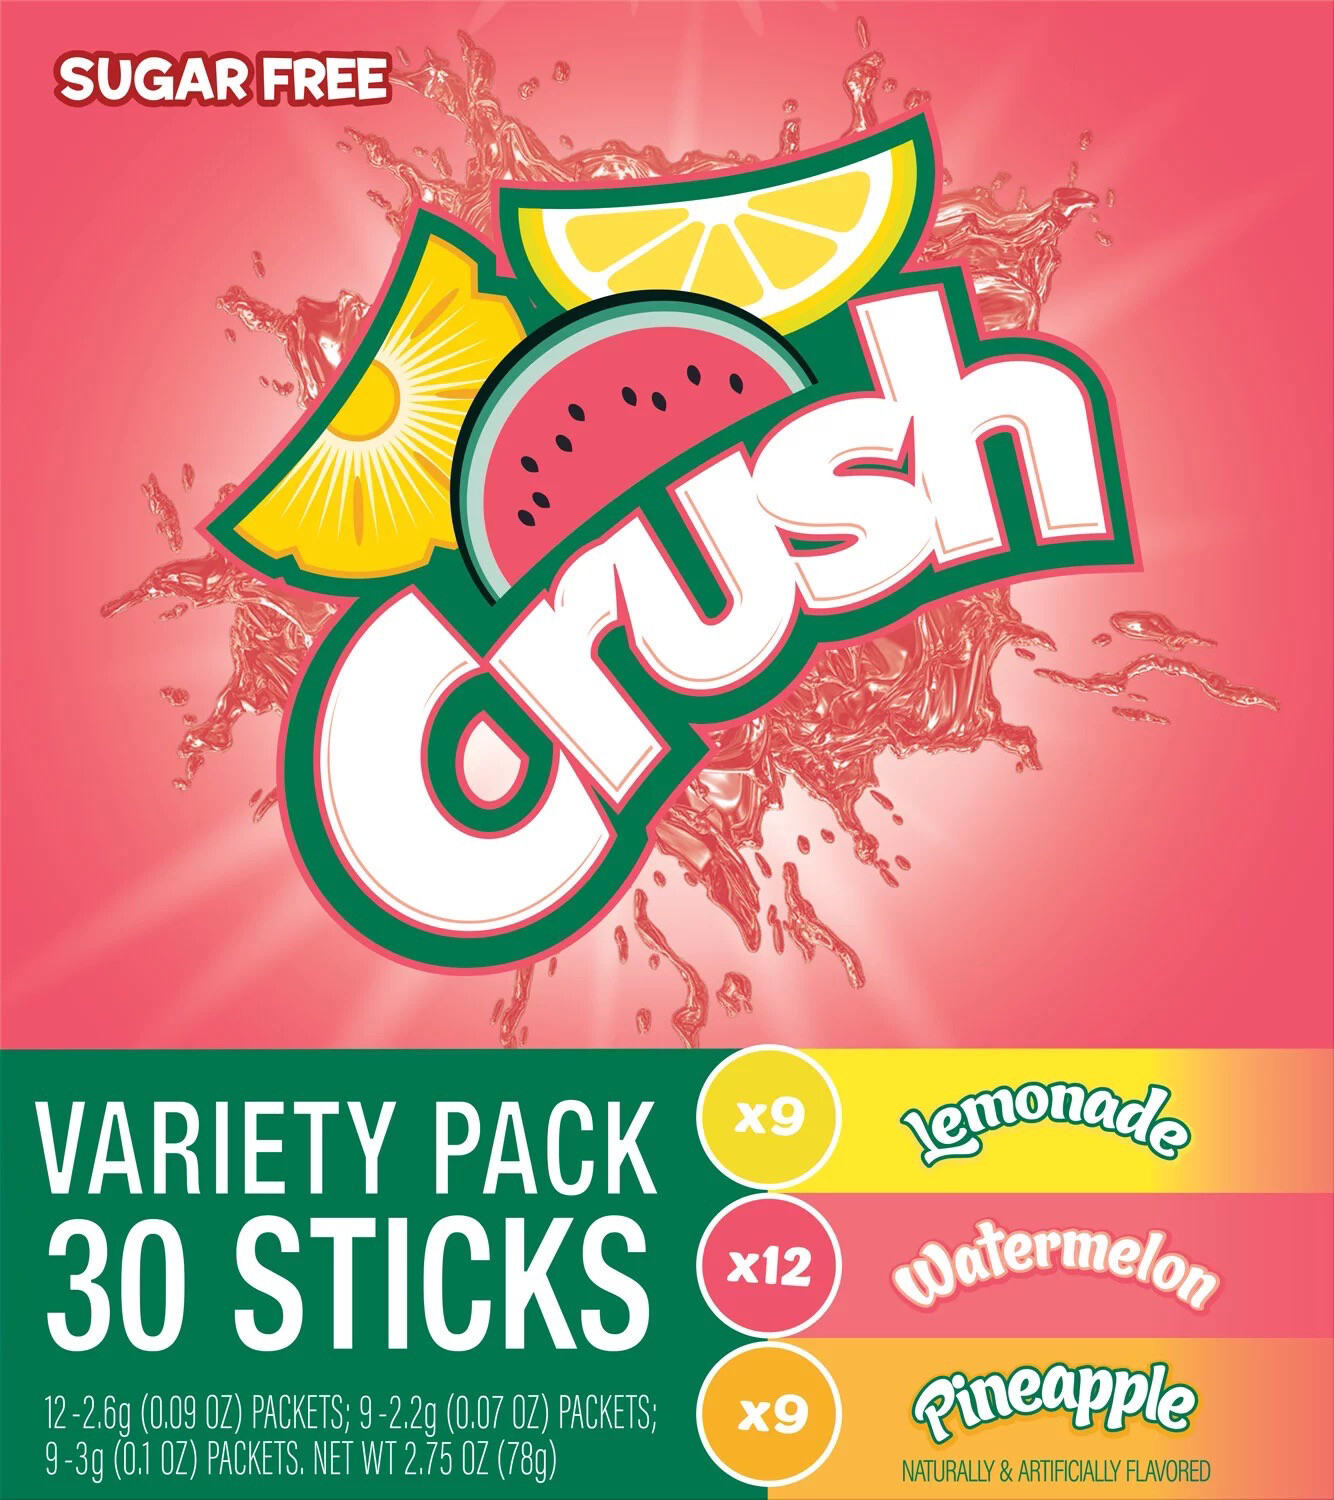 Crush SUGAR FREE Variety Pack 30 Sticks on the go Lemonade Watermelon Pineapple 